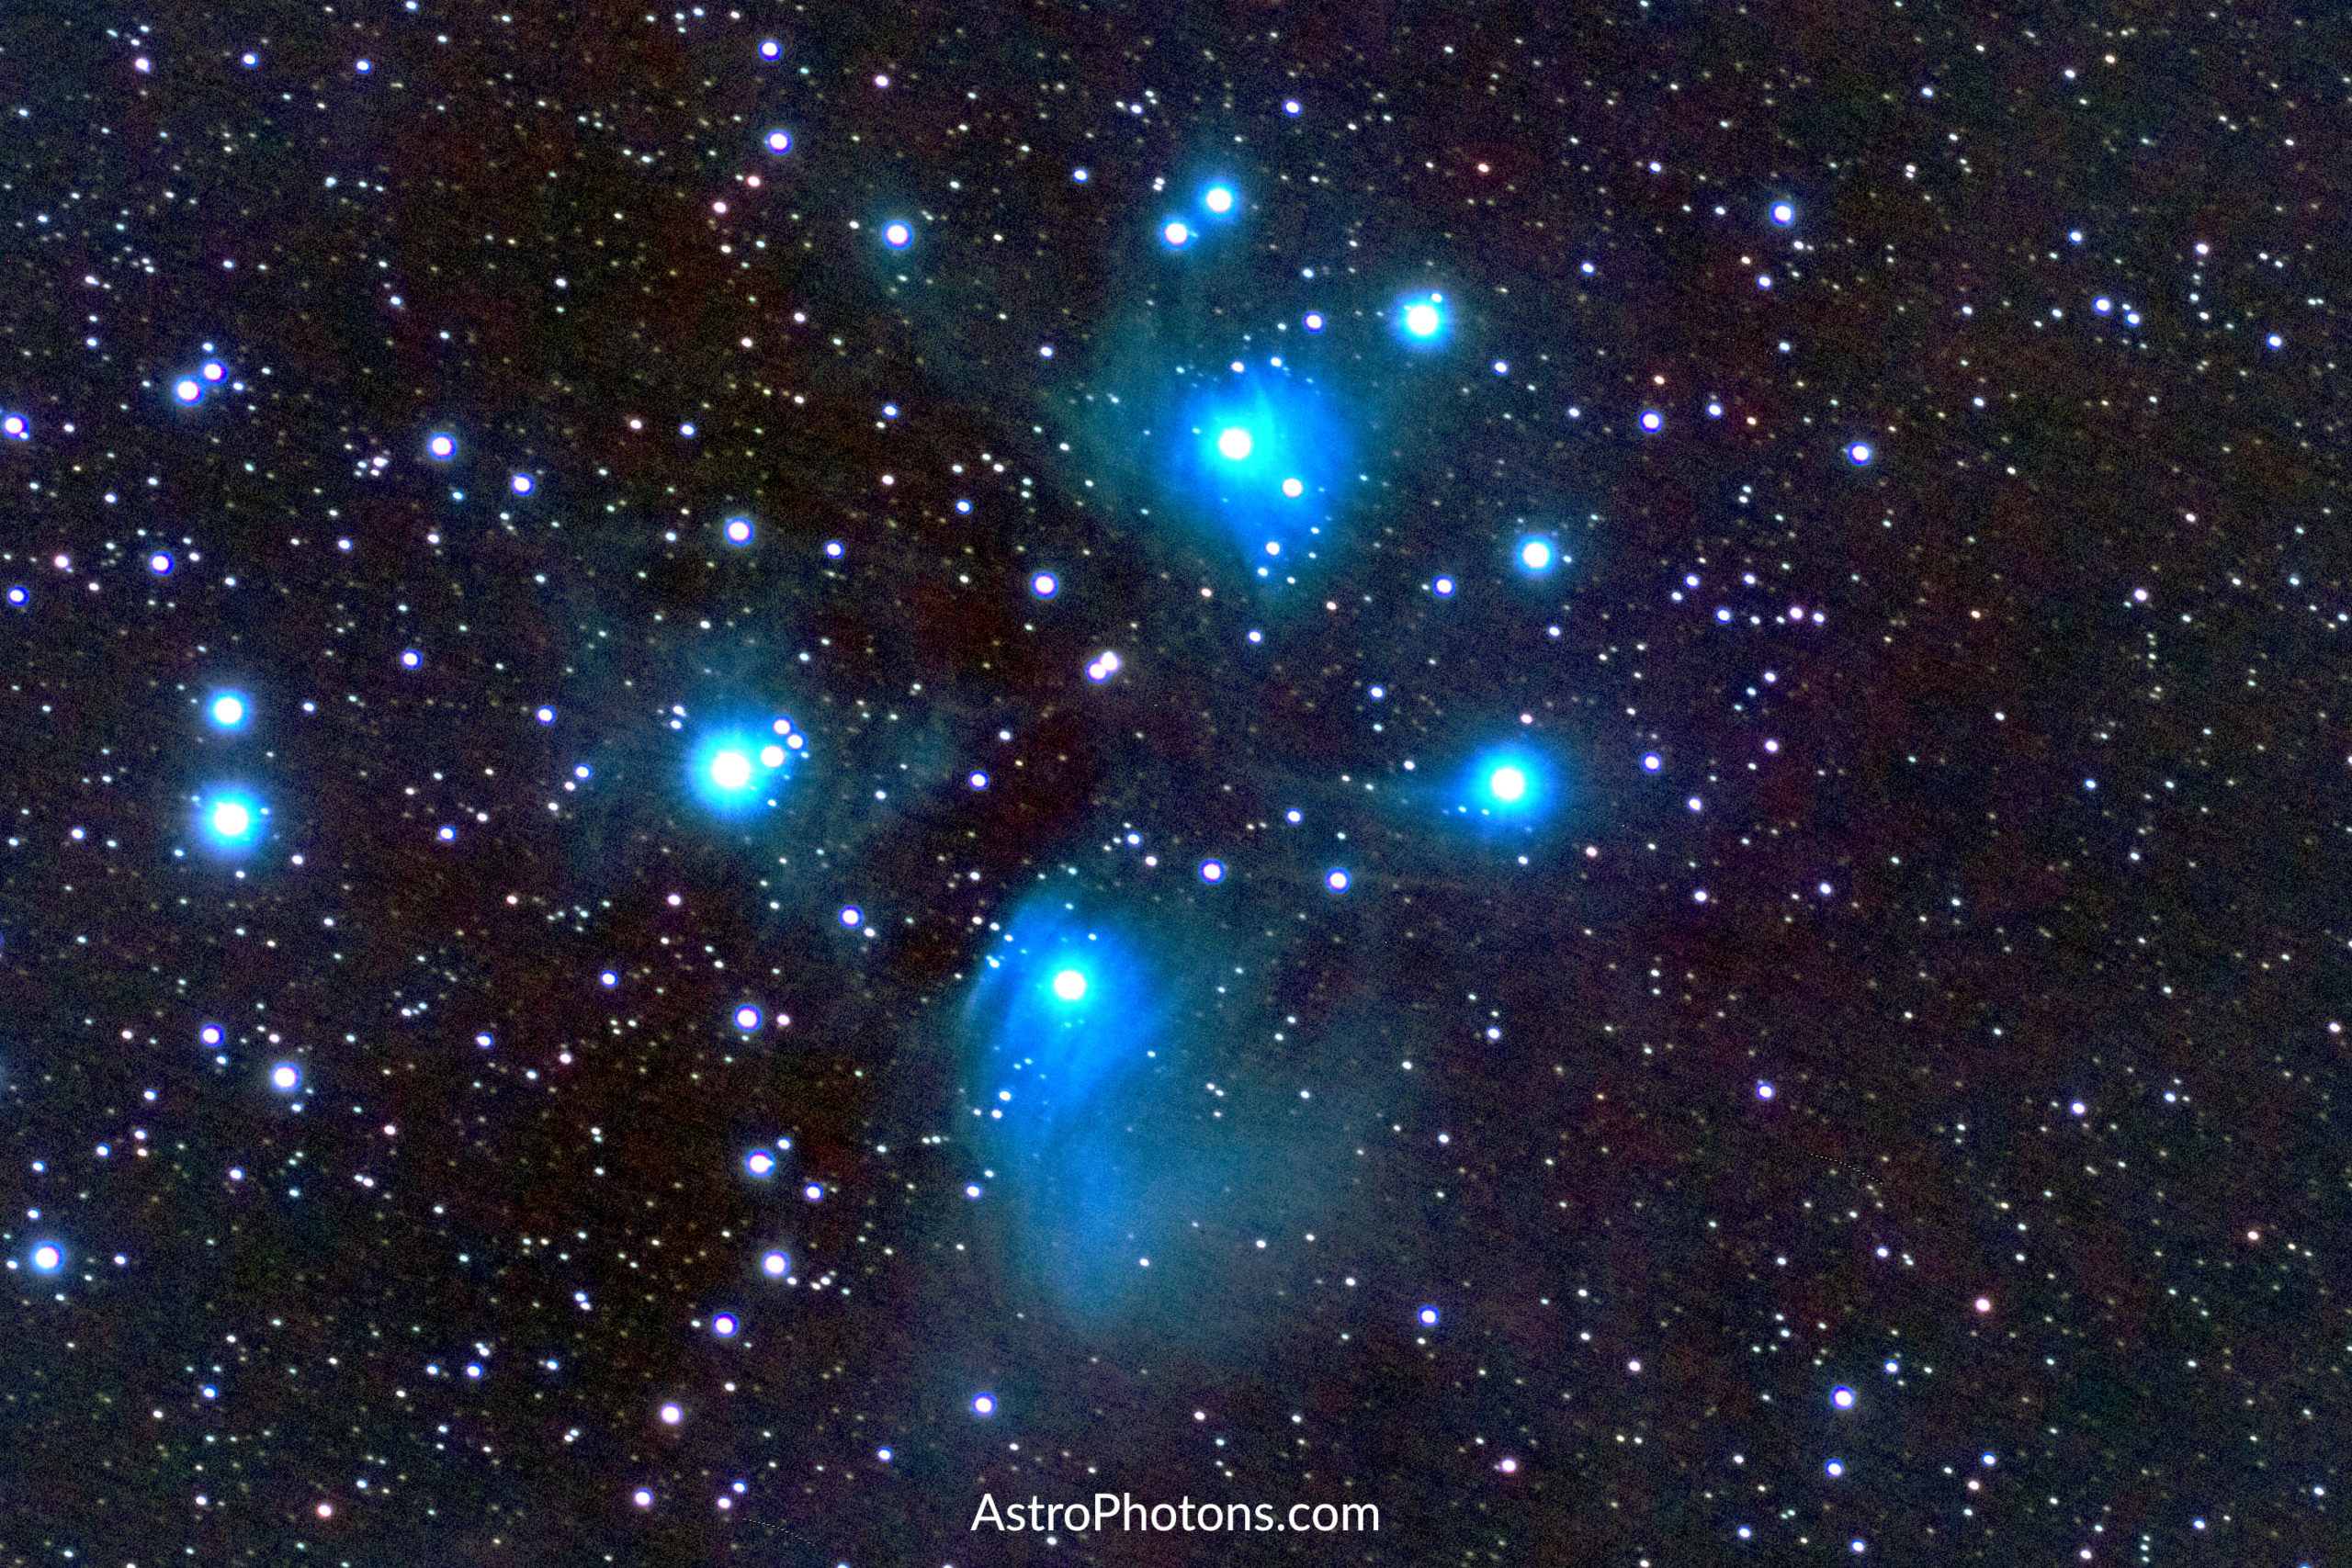 Pleiades Star Cluster (Seven Sisters, Subaru)